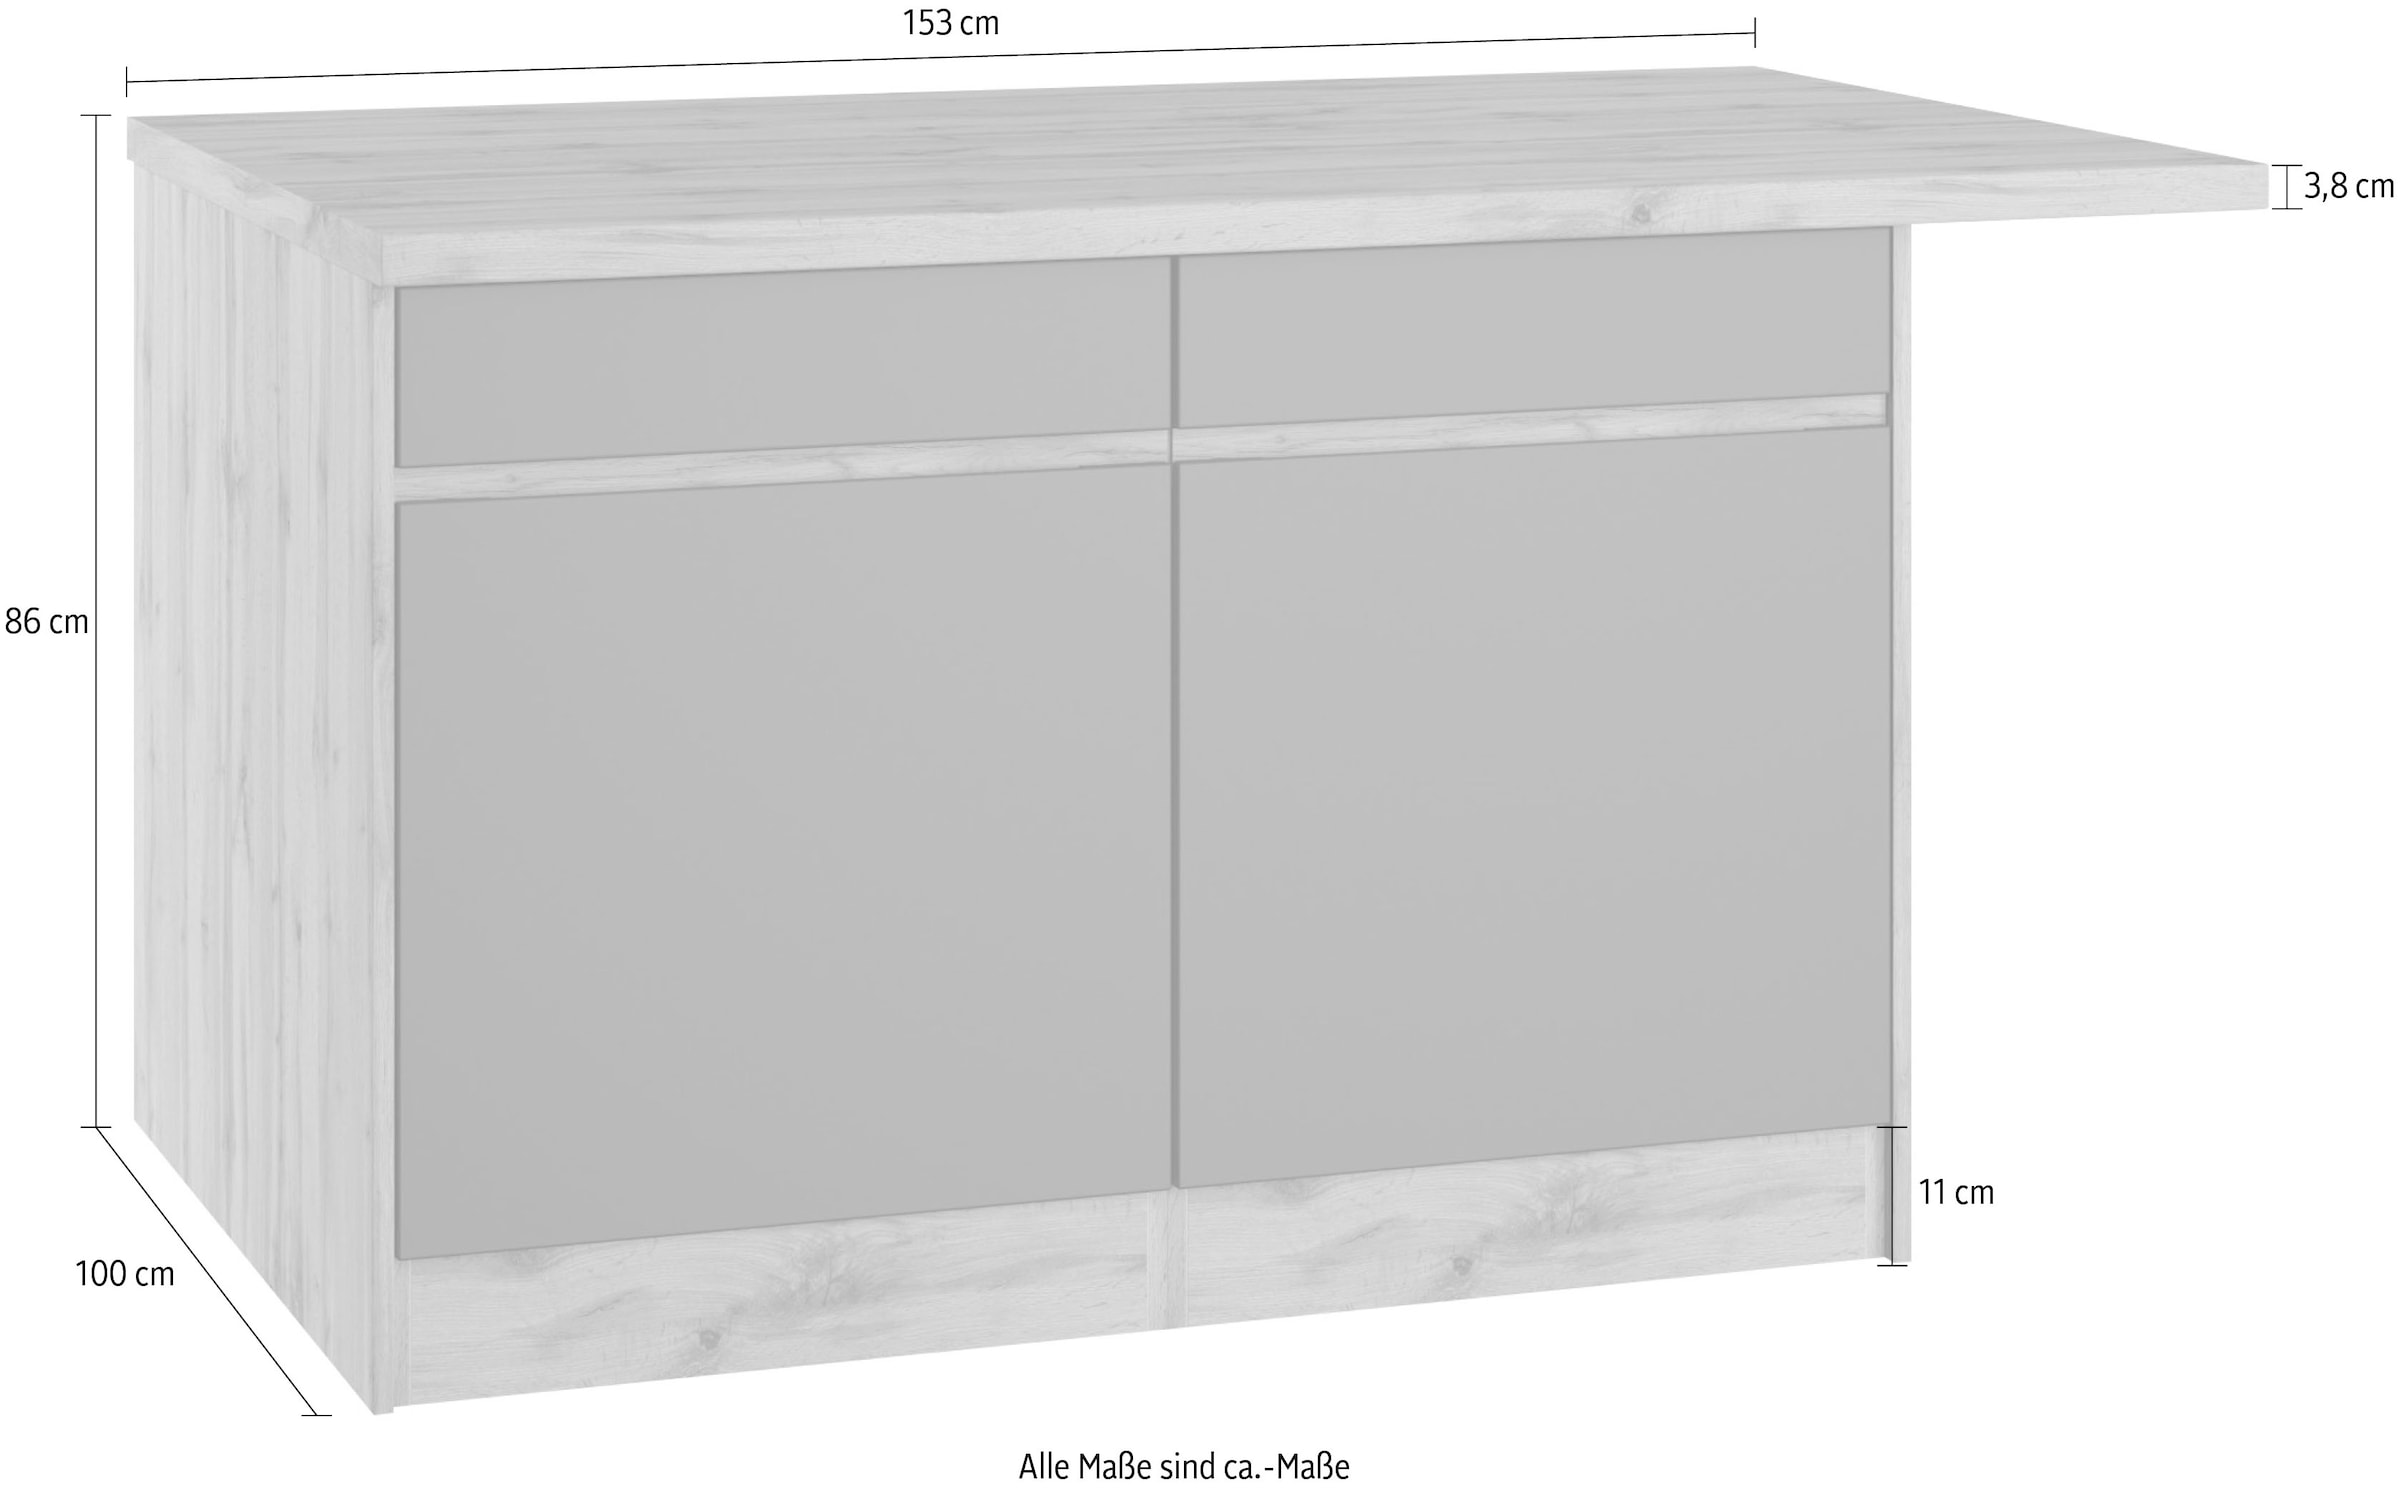 Kochstation Kücheninsel »KS-Riesa«, Breite 153 cm, Tiefe 100 cm, MDF-Fronten